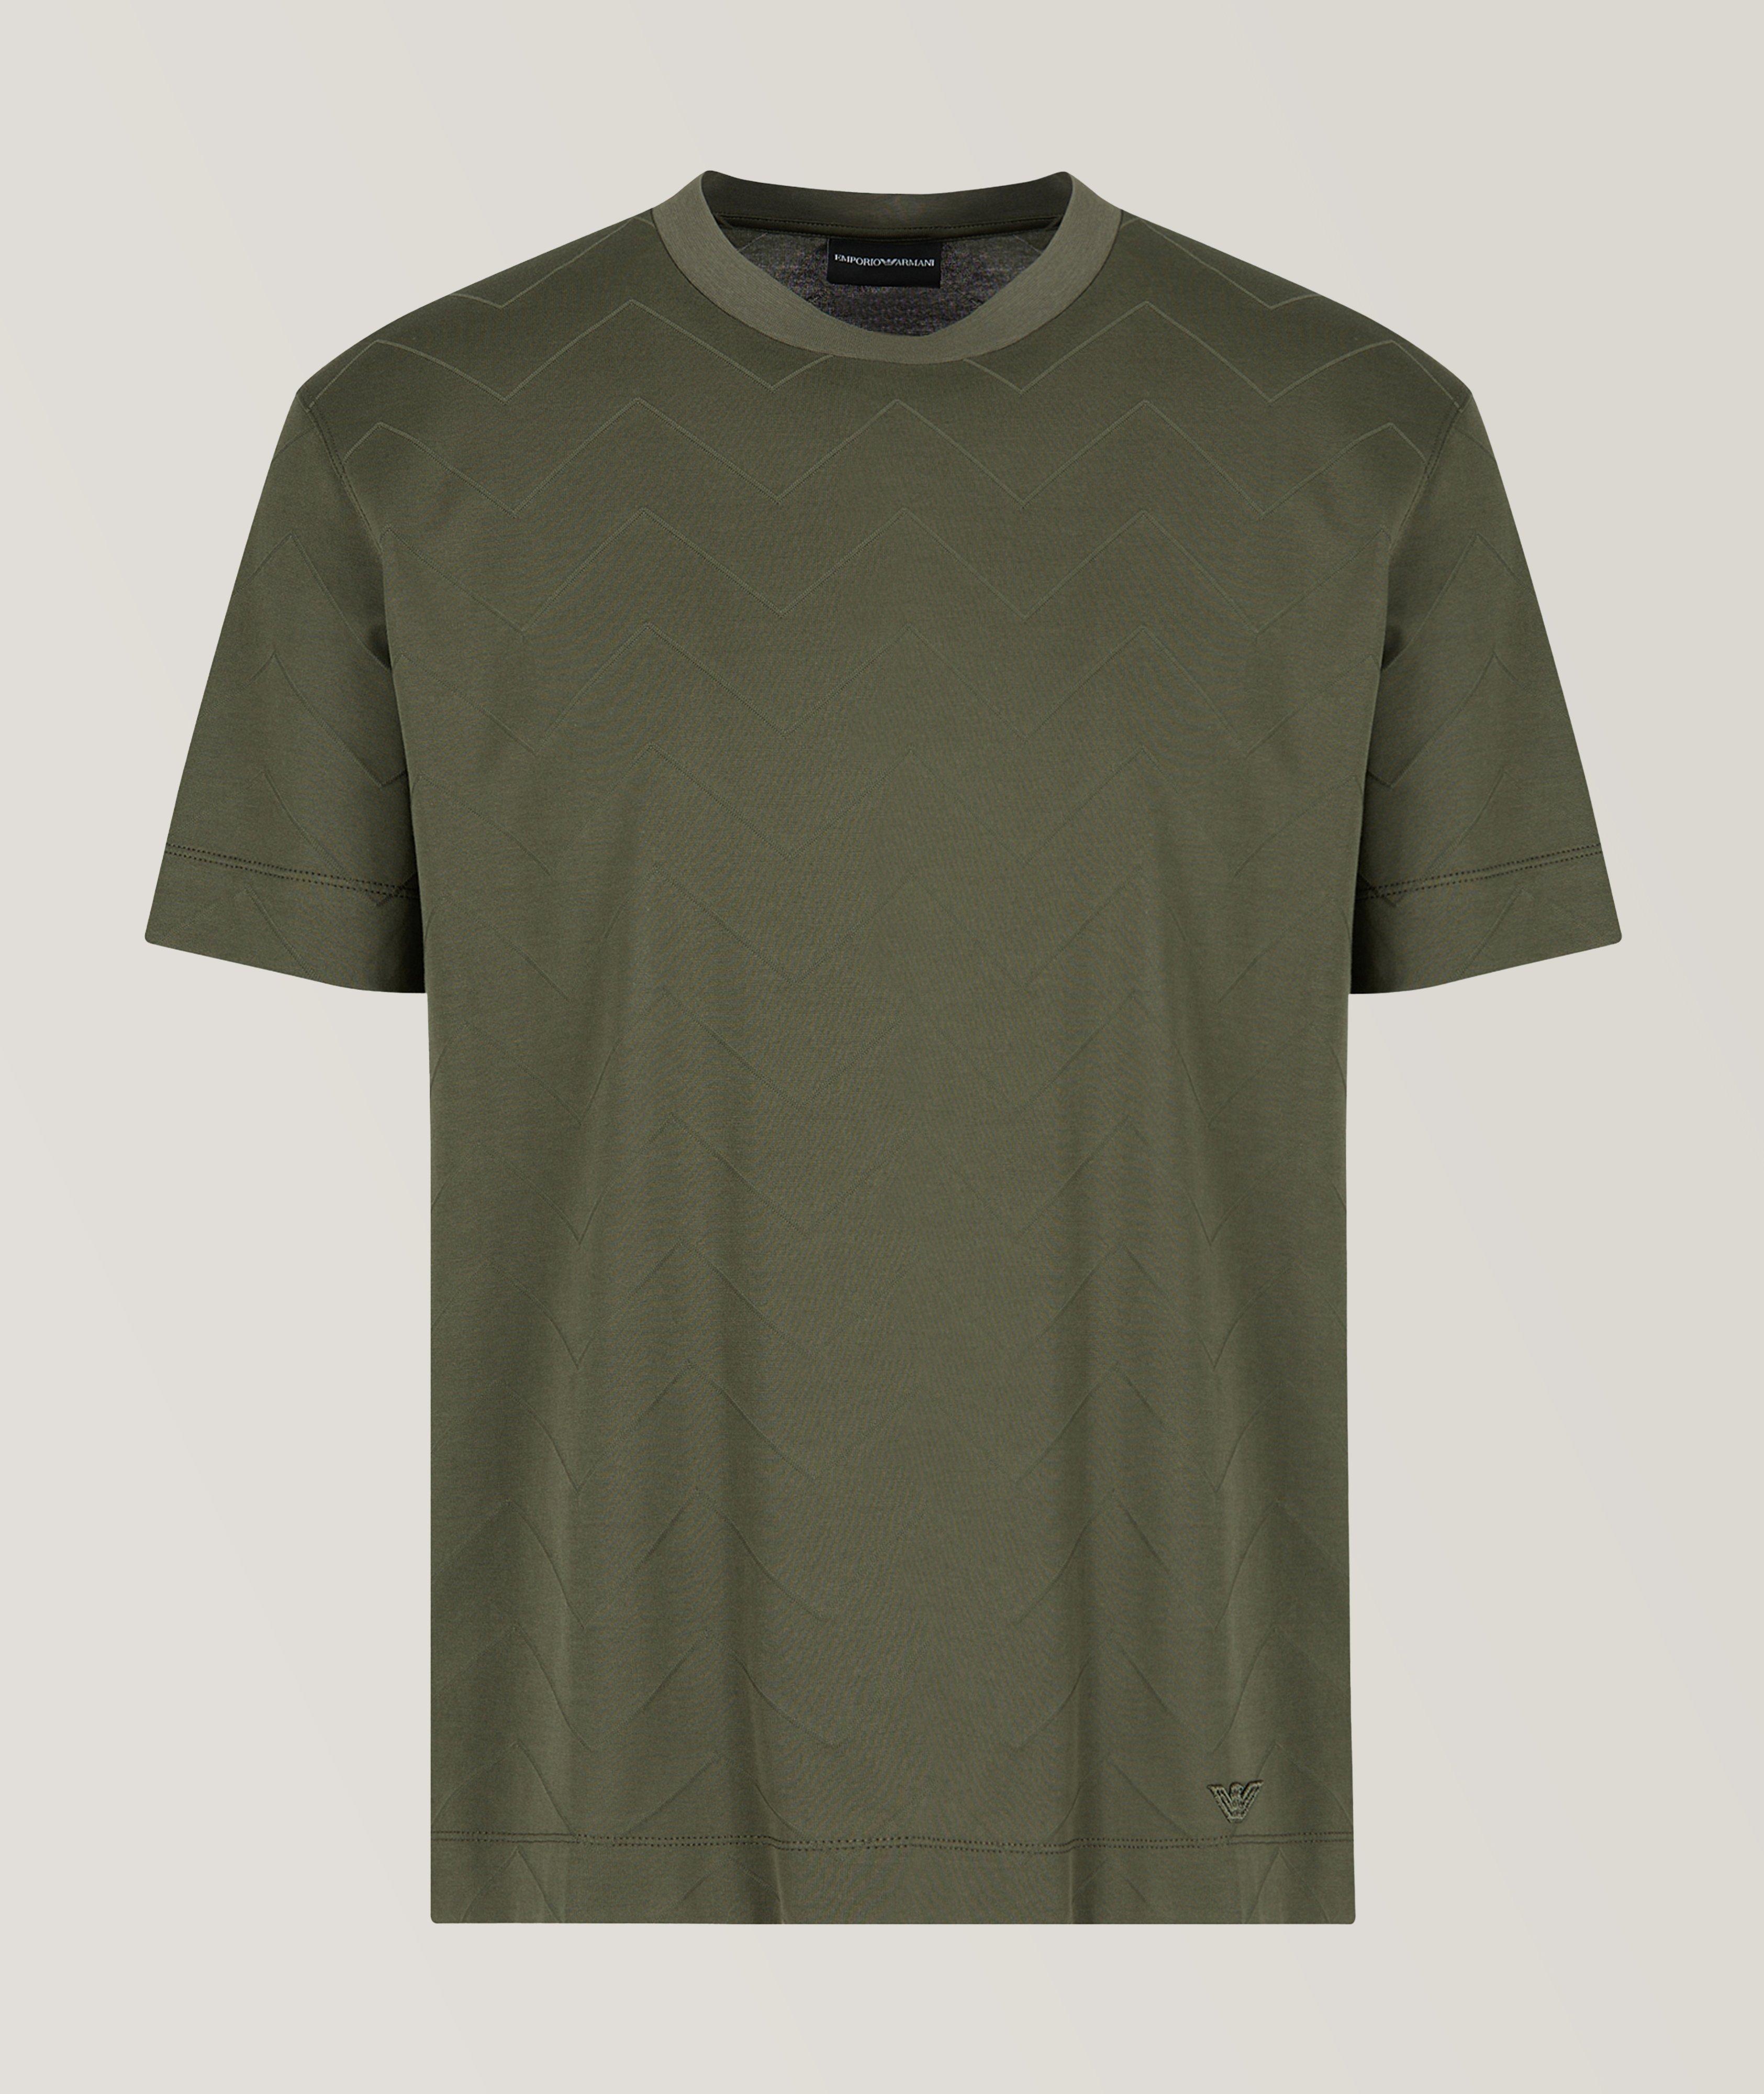 All-Over Jacquard Motif Cotton T-Shirt image 0